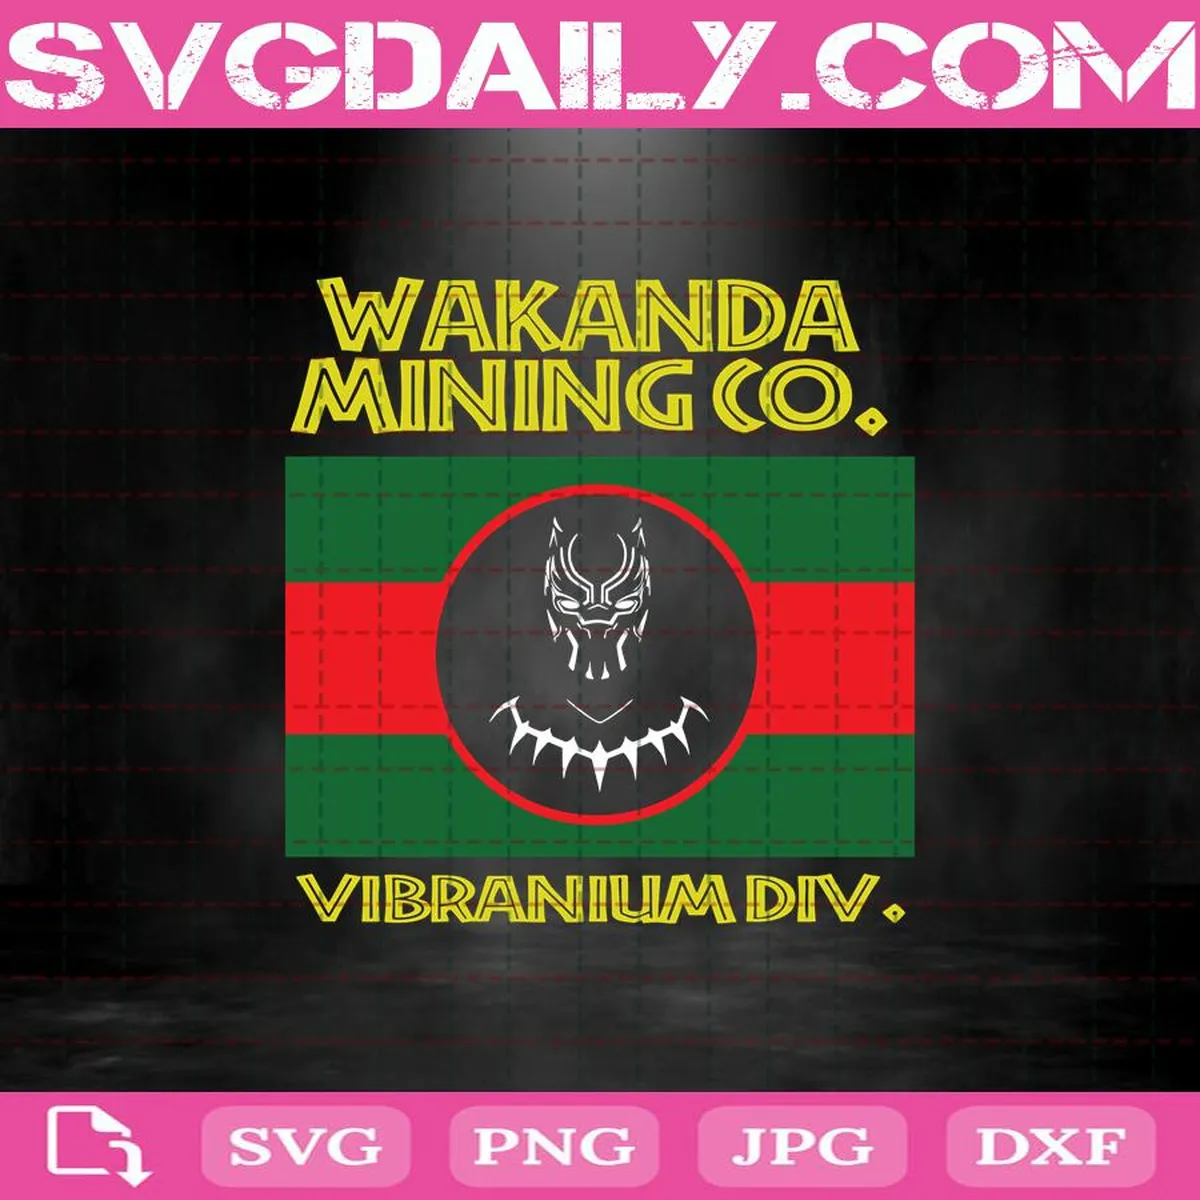 Wakanda Mining Co Vibranium Div Svg, Black Panther Svg, Wakanda Forever Svg, Wakanda Mining Co Svg, Wakanda Svg